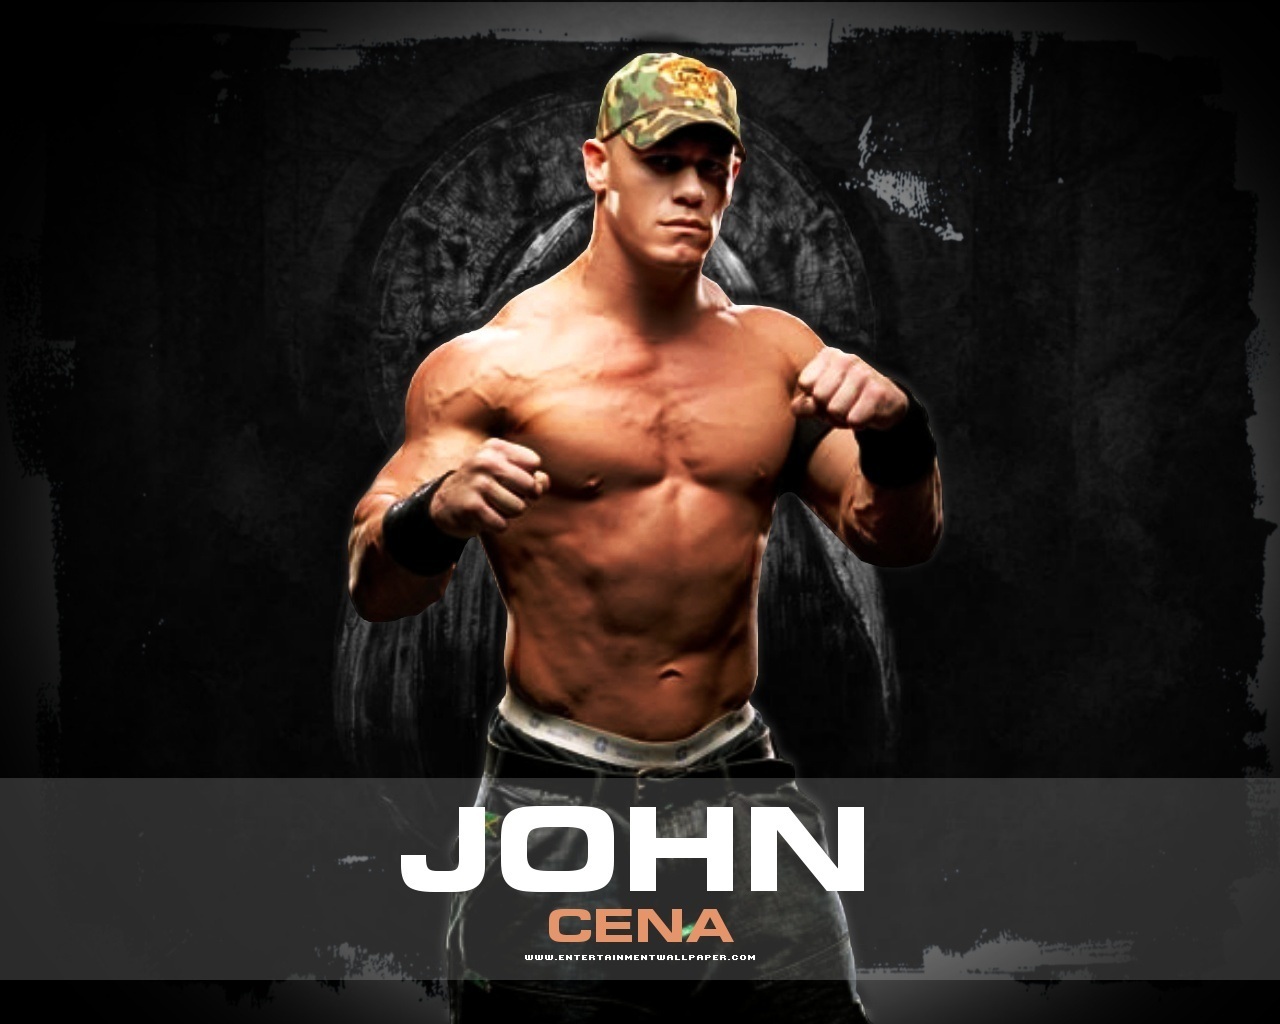 John Cena Image HD Wallpaper And Background